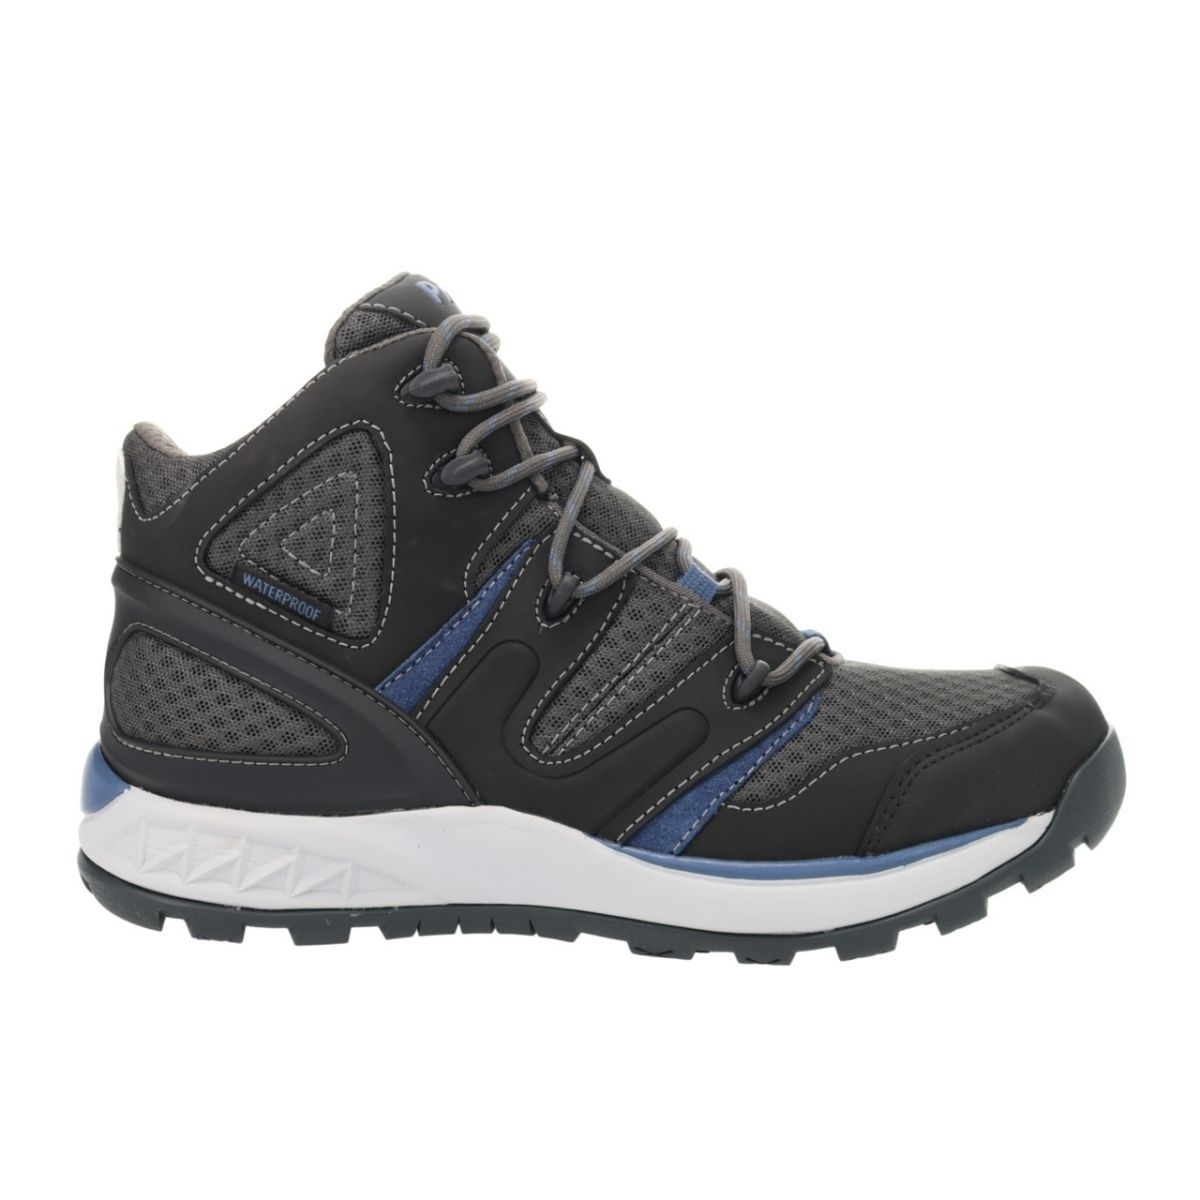 Propet Men's Veymont Waterproof Hiking Boot Grey/Blue - MOA022SGRB GREY/BLUE - GREY/BLUE, 12